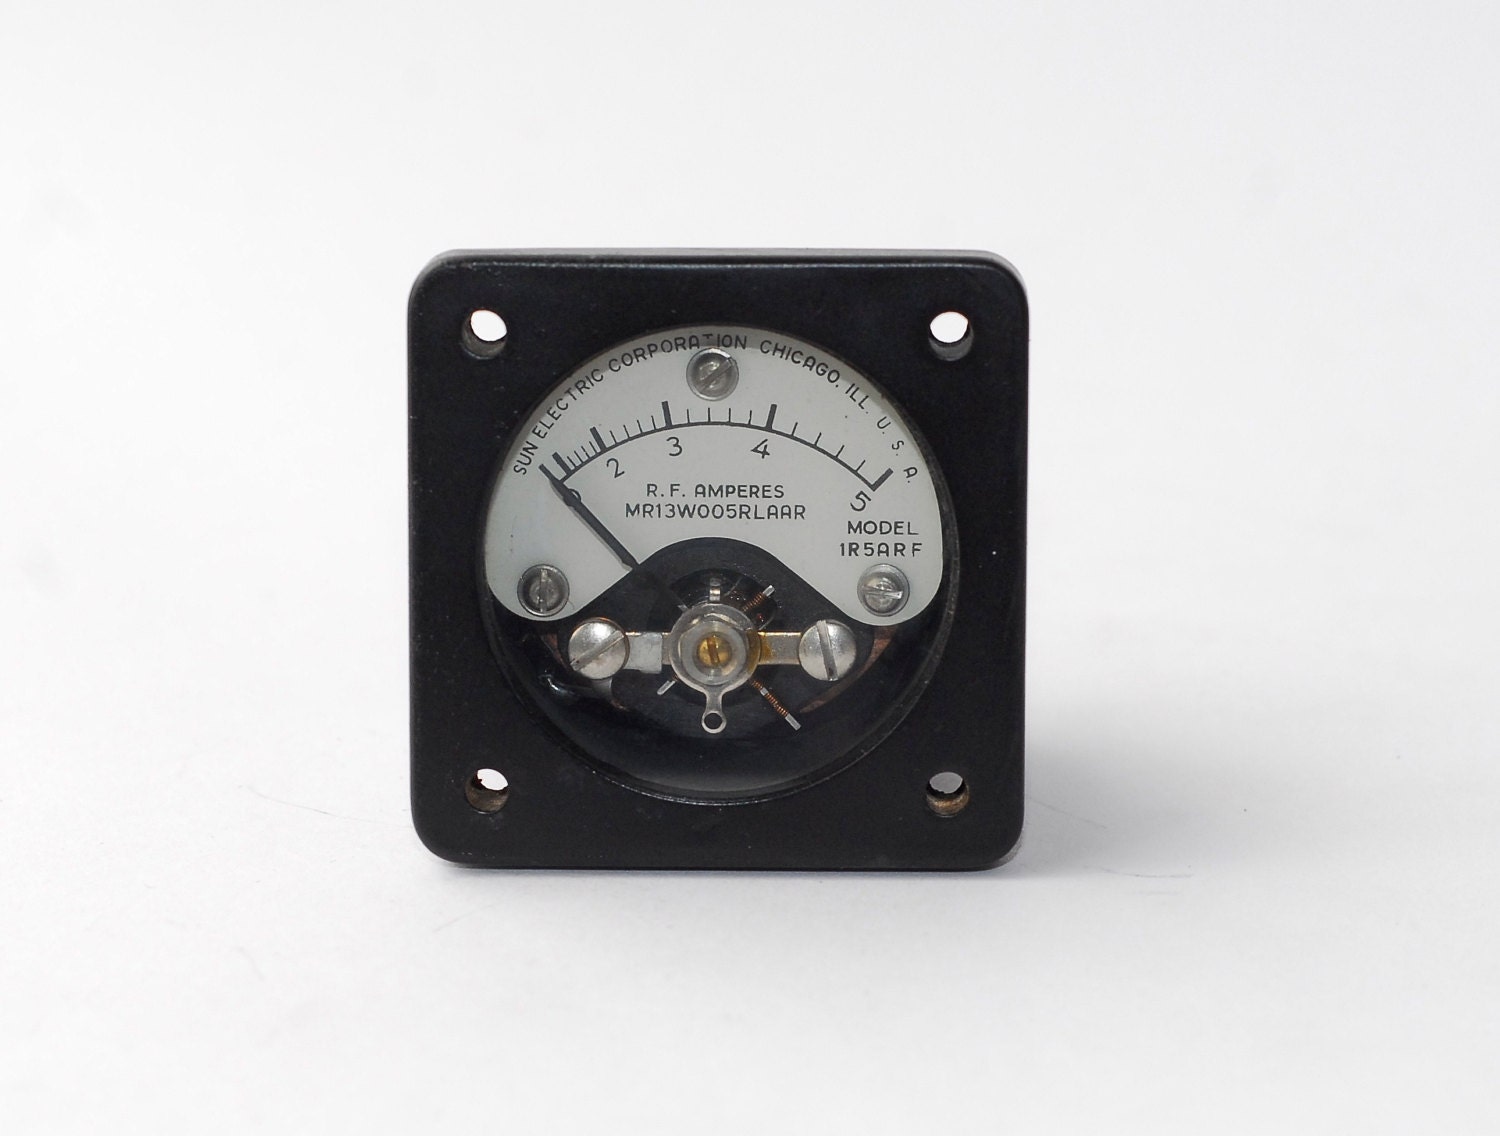 Weston 3 Range AC Laboratory Analog Voltmeter With Bakelite Case